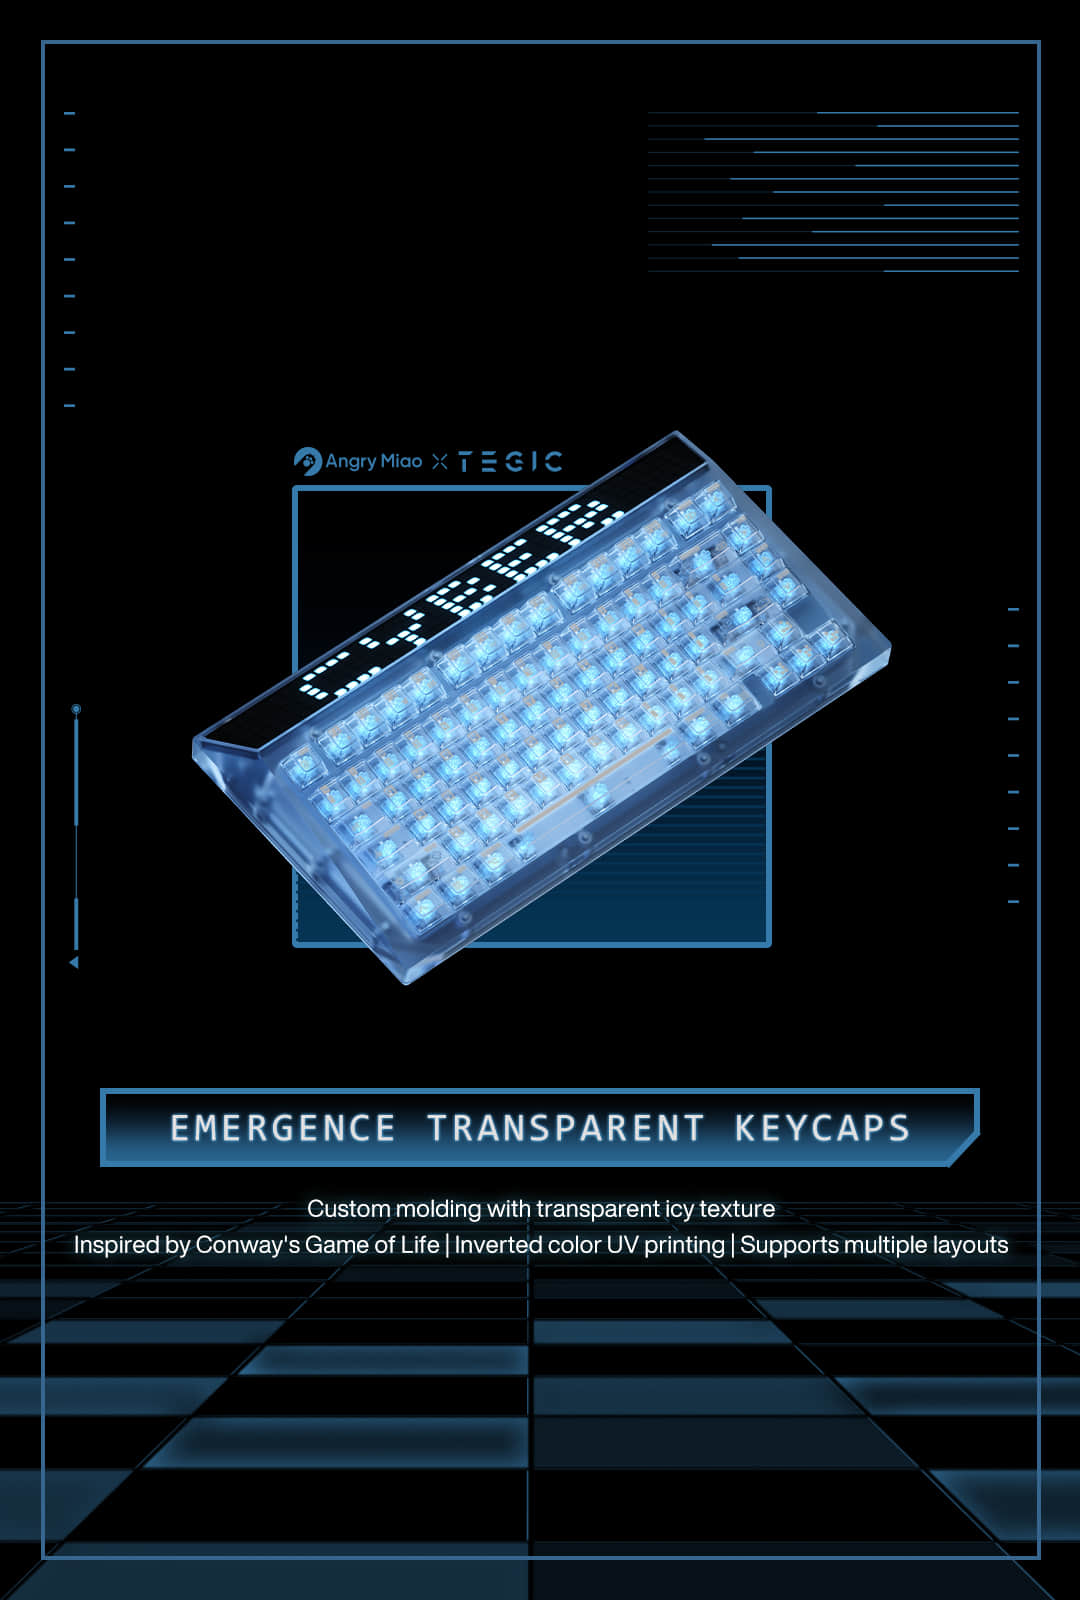 AM x Tegic [Emergence] Transparent Keycaps